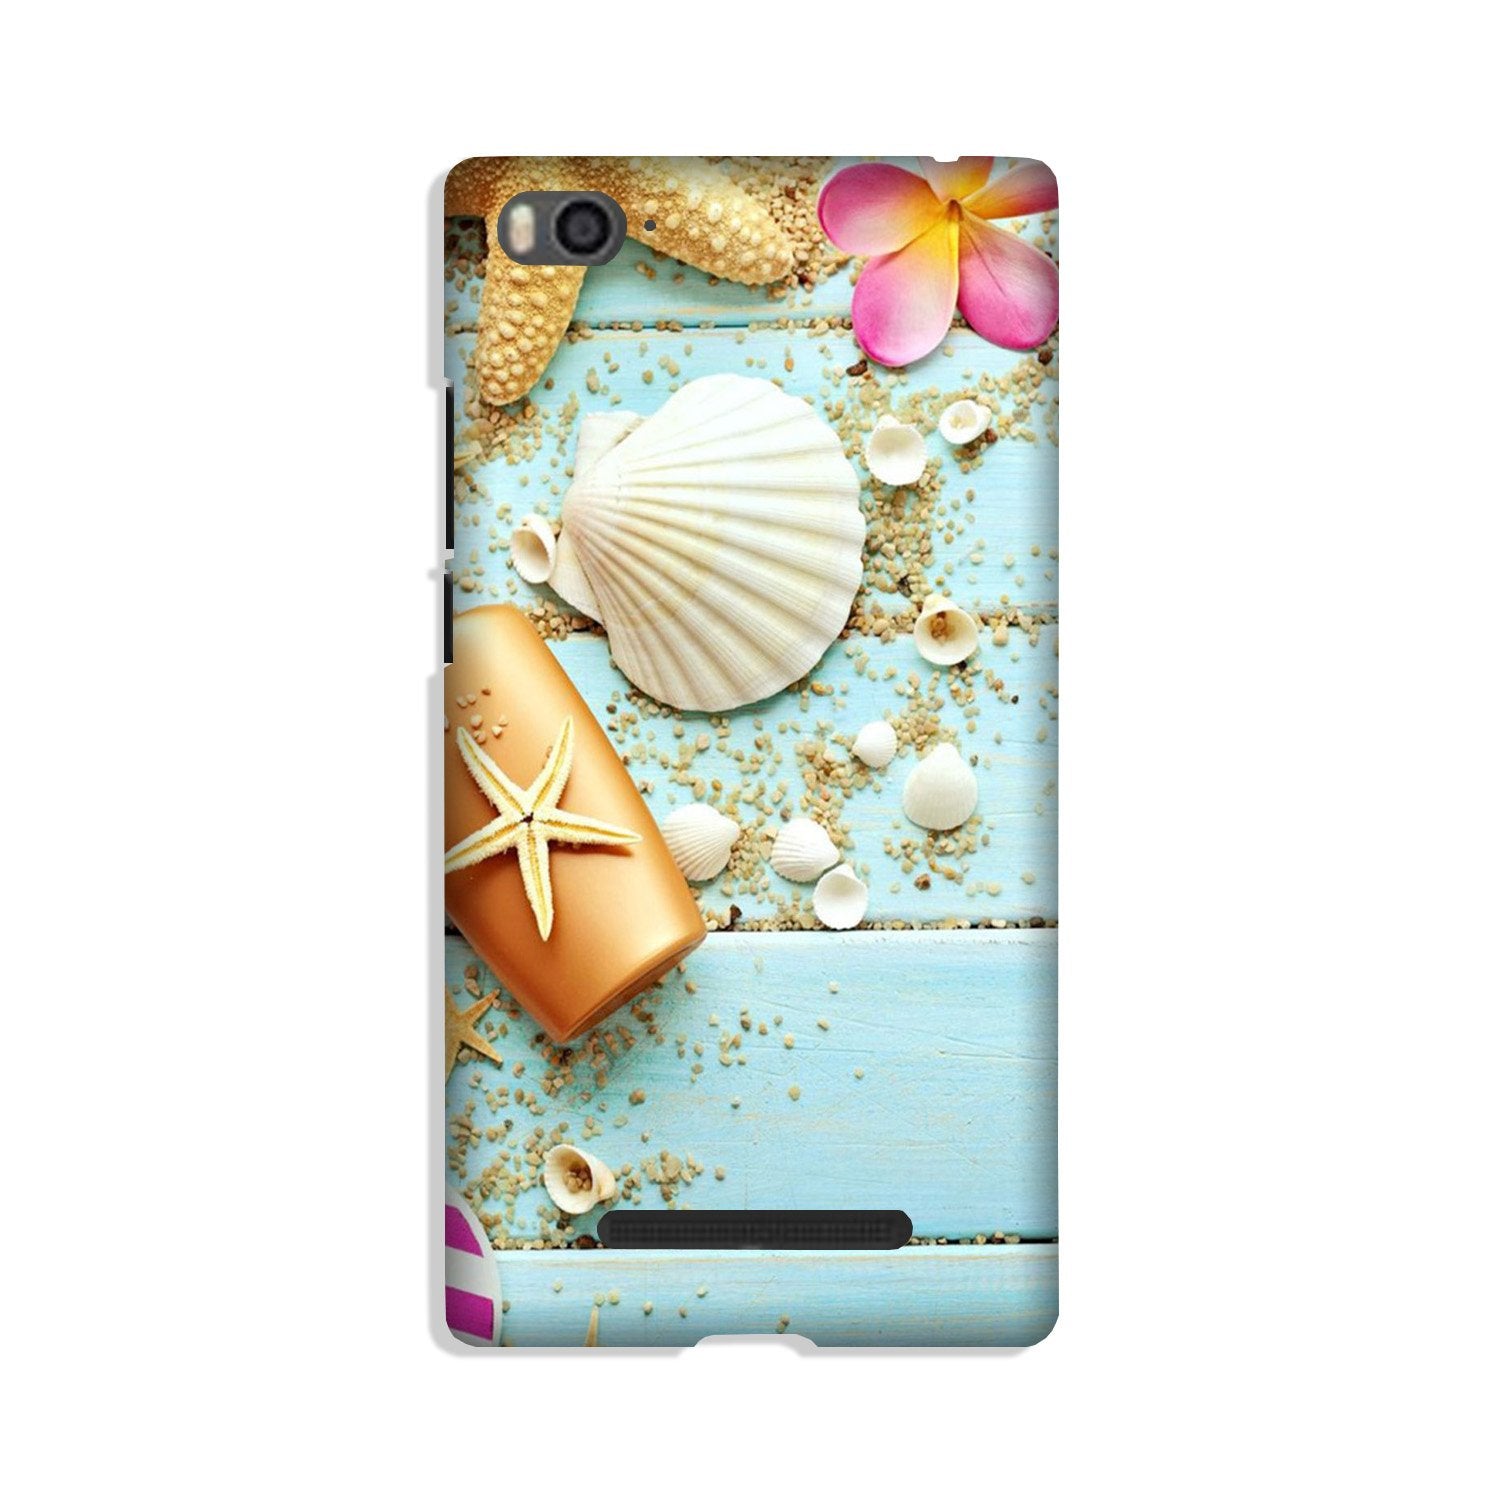 Sea Shells Case for Xiaomi Mi 4i